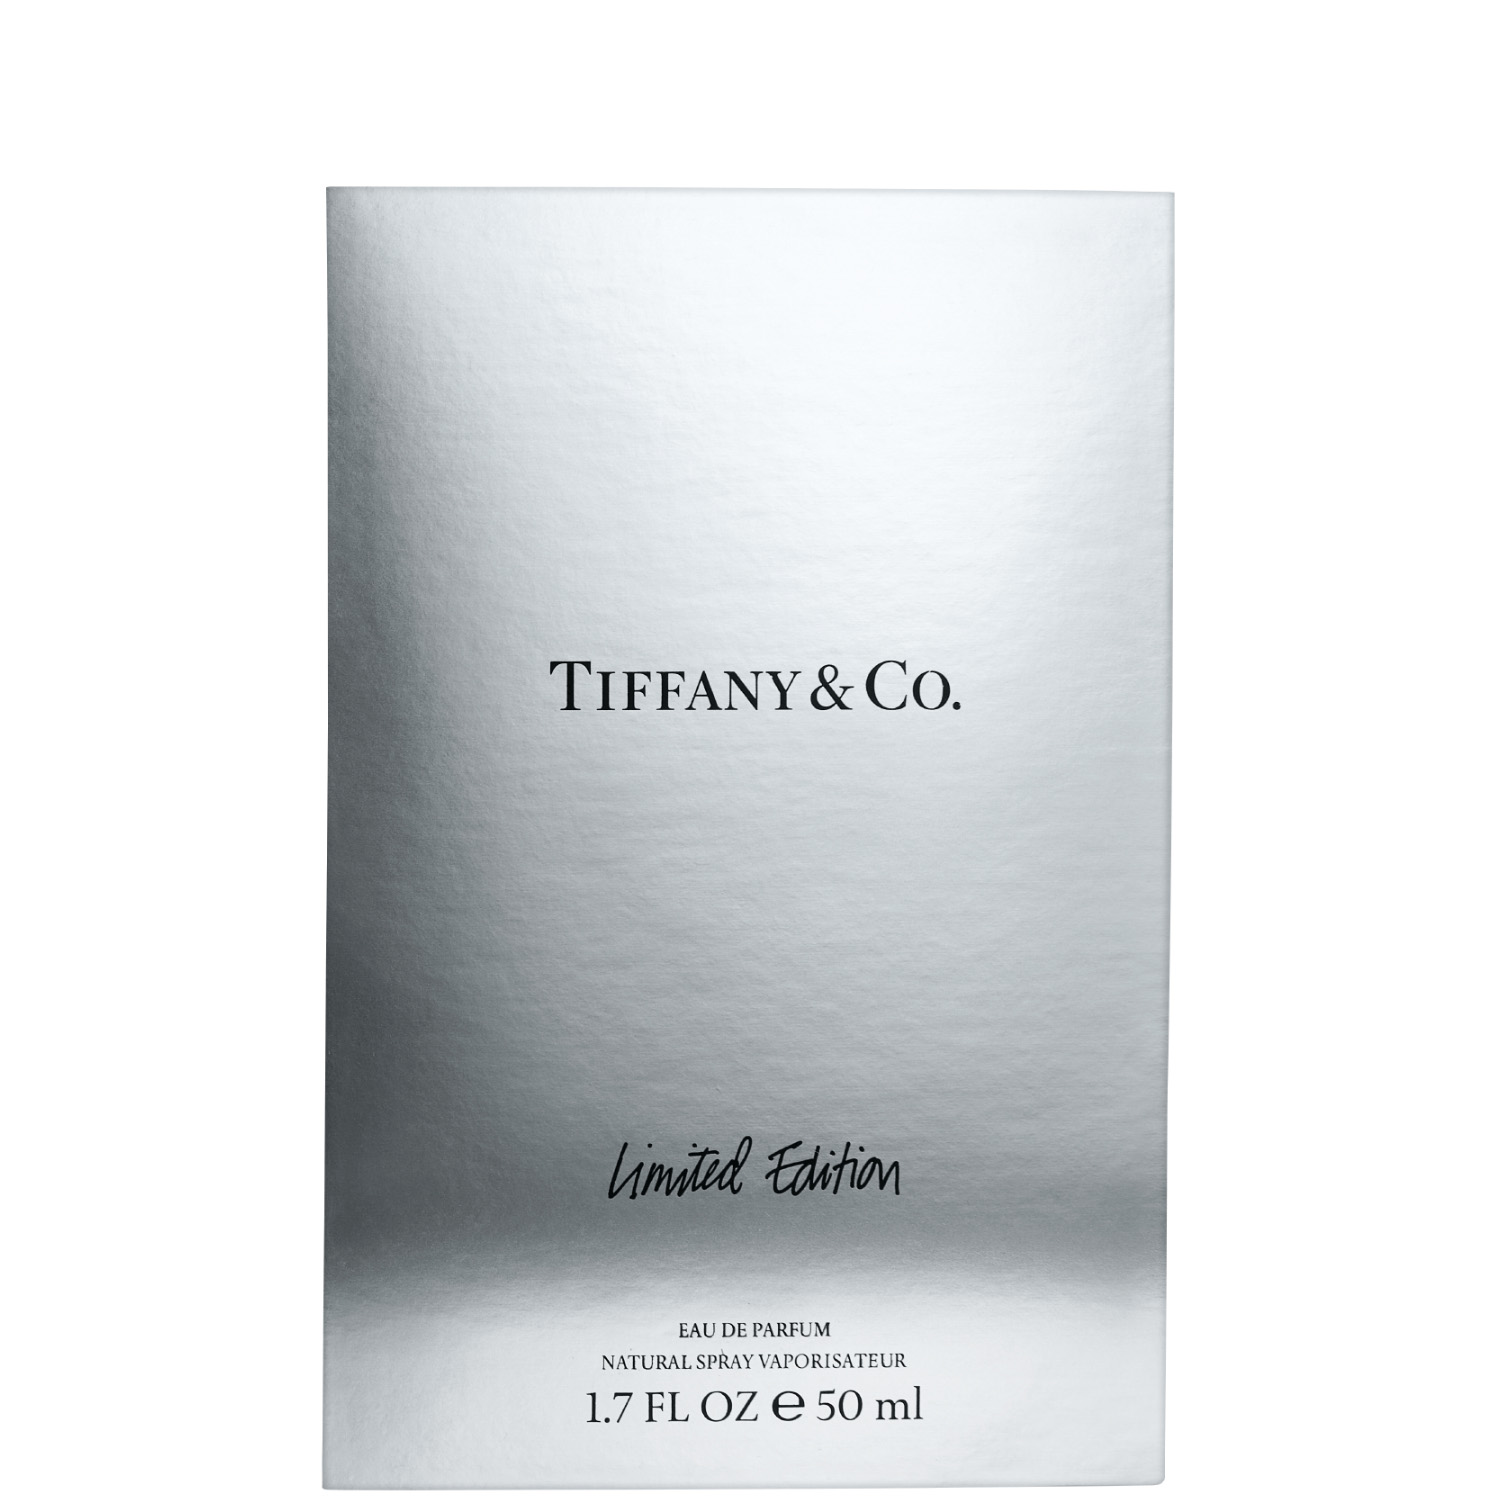 Tiffany & Co. Eau de Parfum Limited Edition 50ml